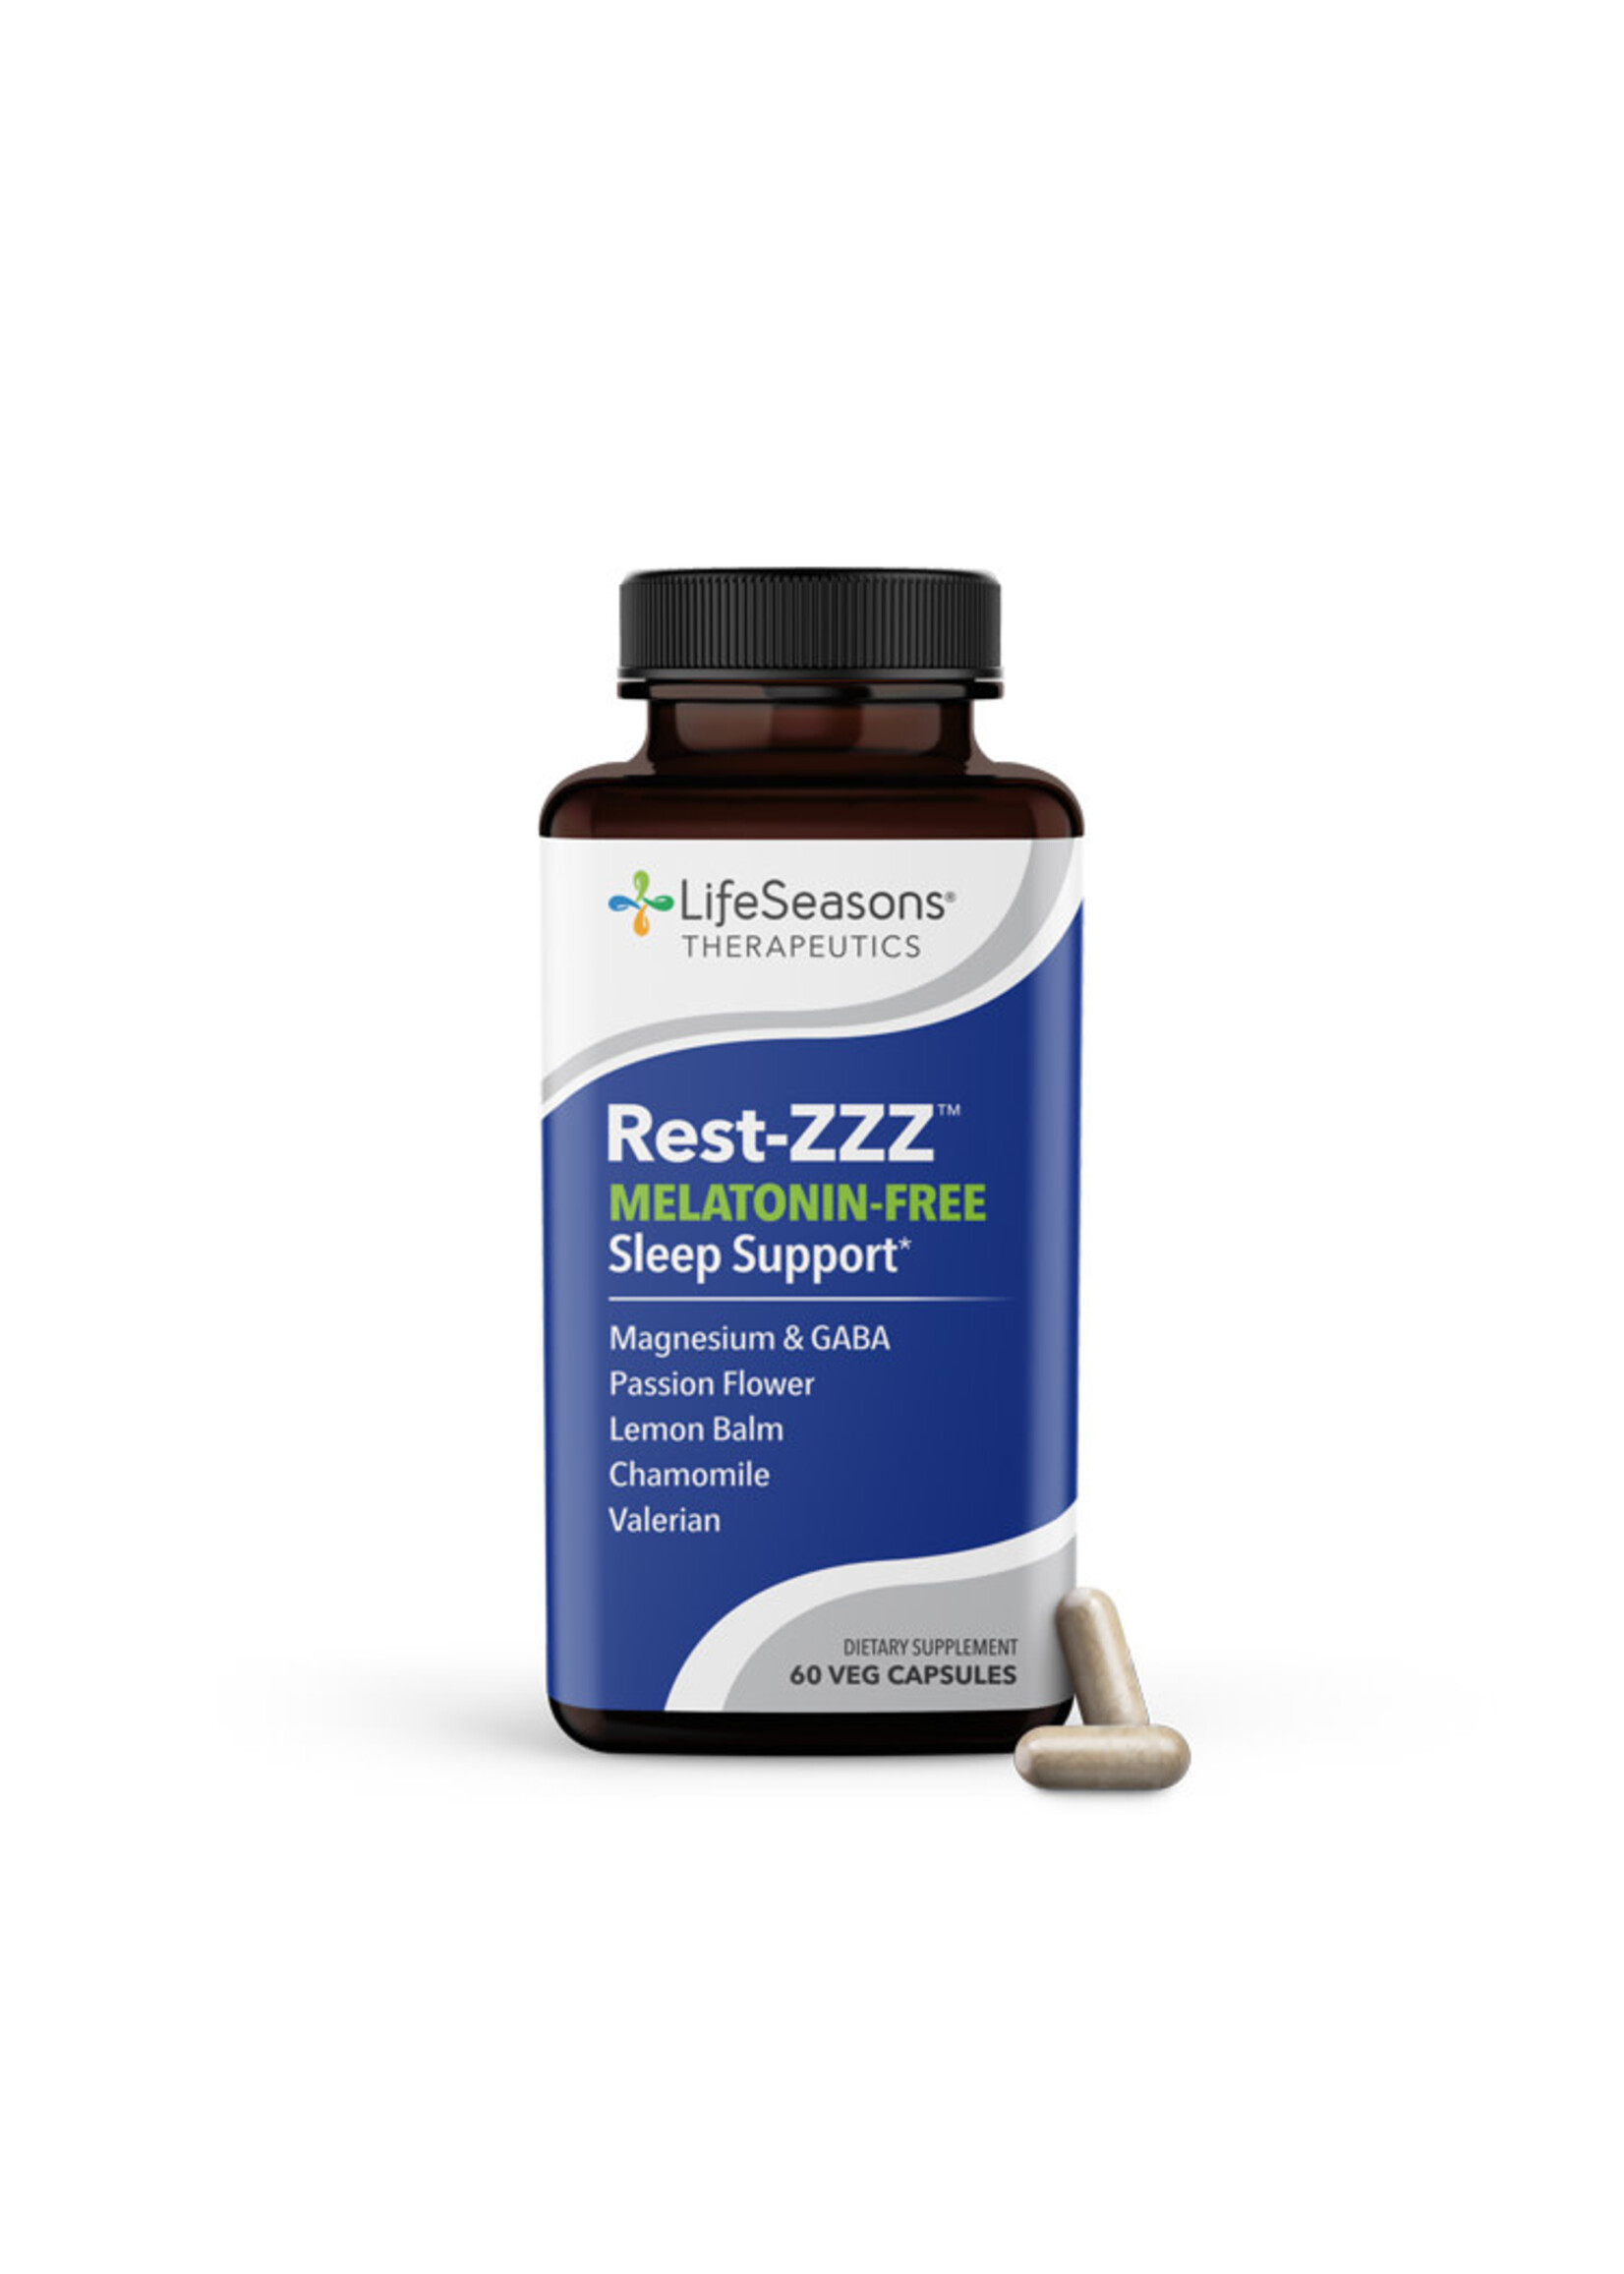 Life Seasons Rest-ZZZ Melatonin Free Sleep Support 60ct